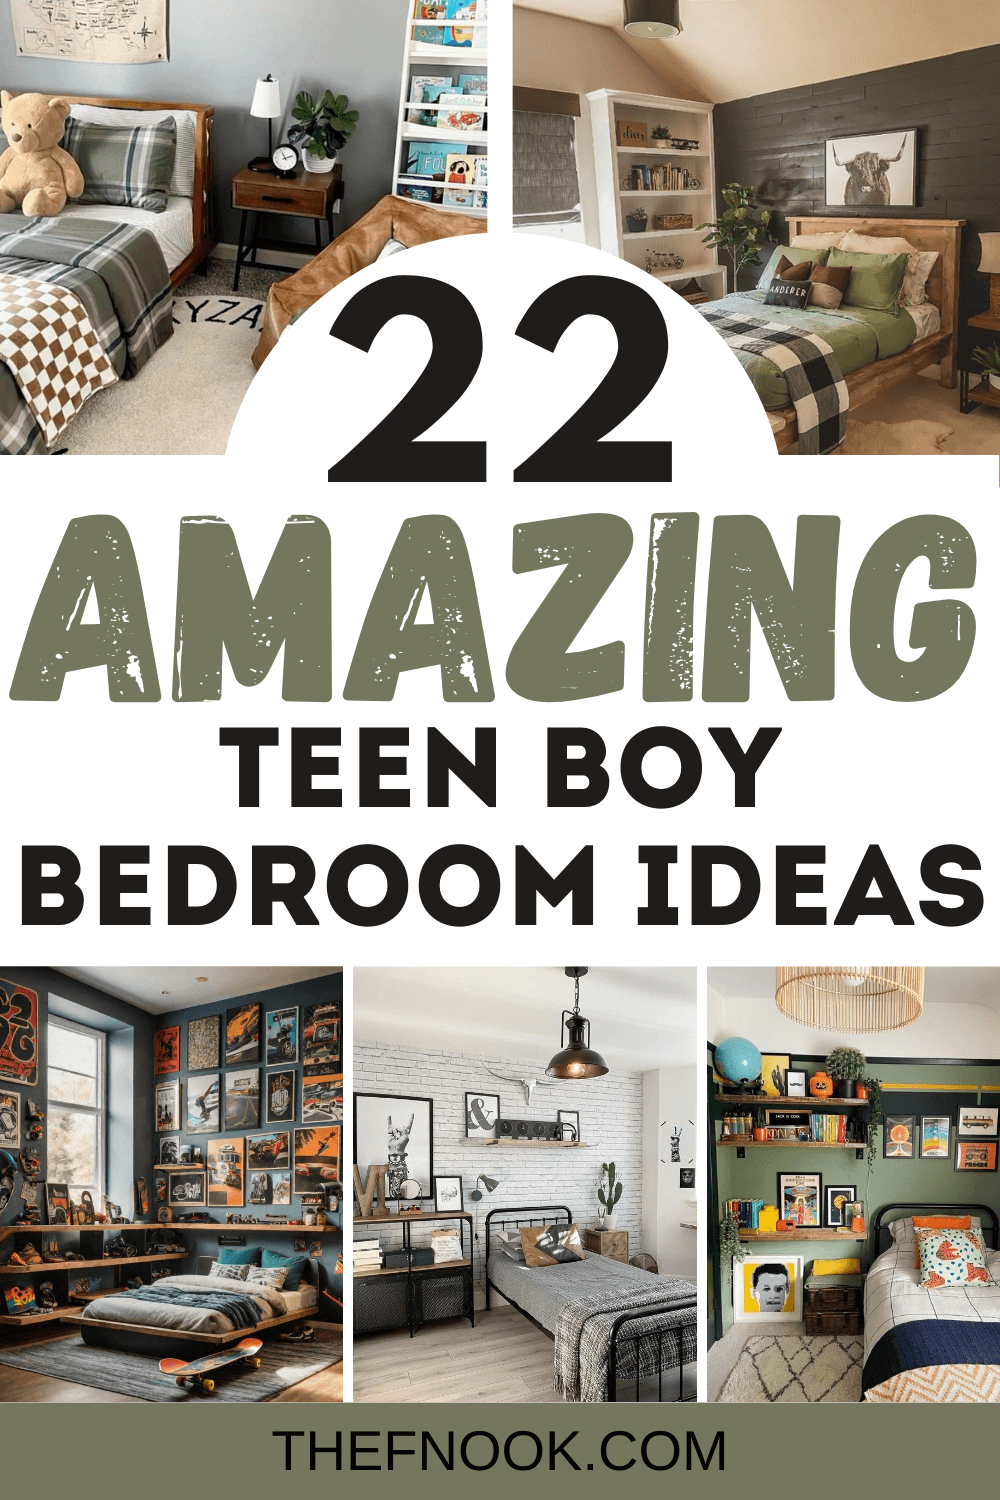 22 Amazing Teen Boy Bedroom Ideas On a Budget